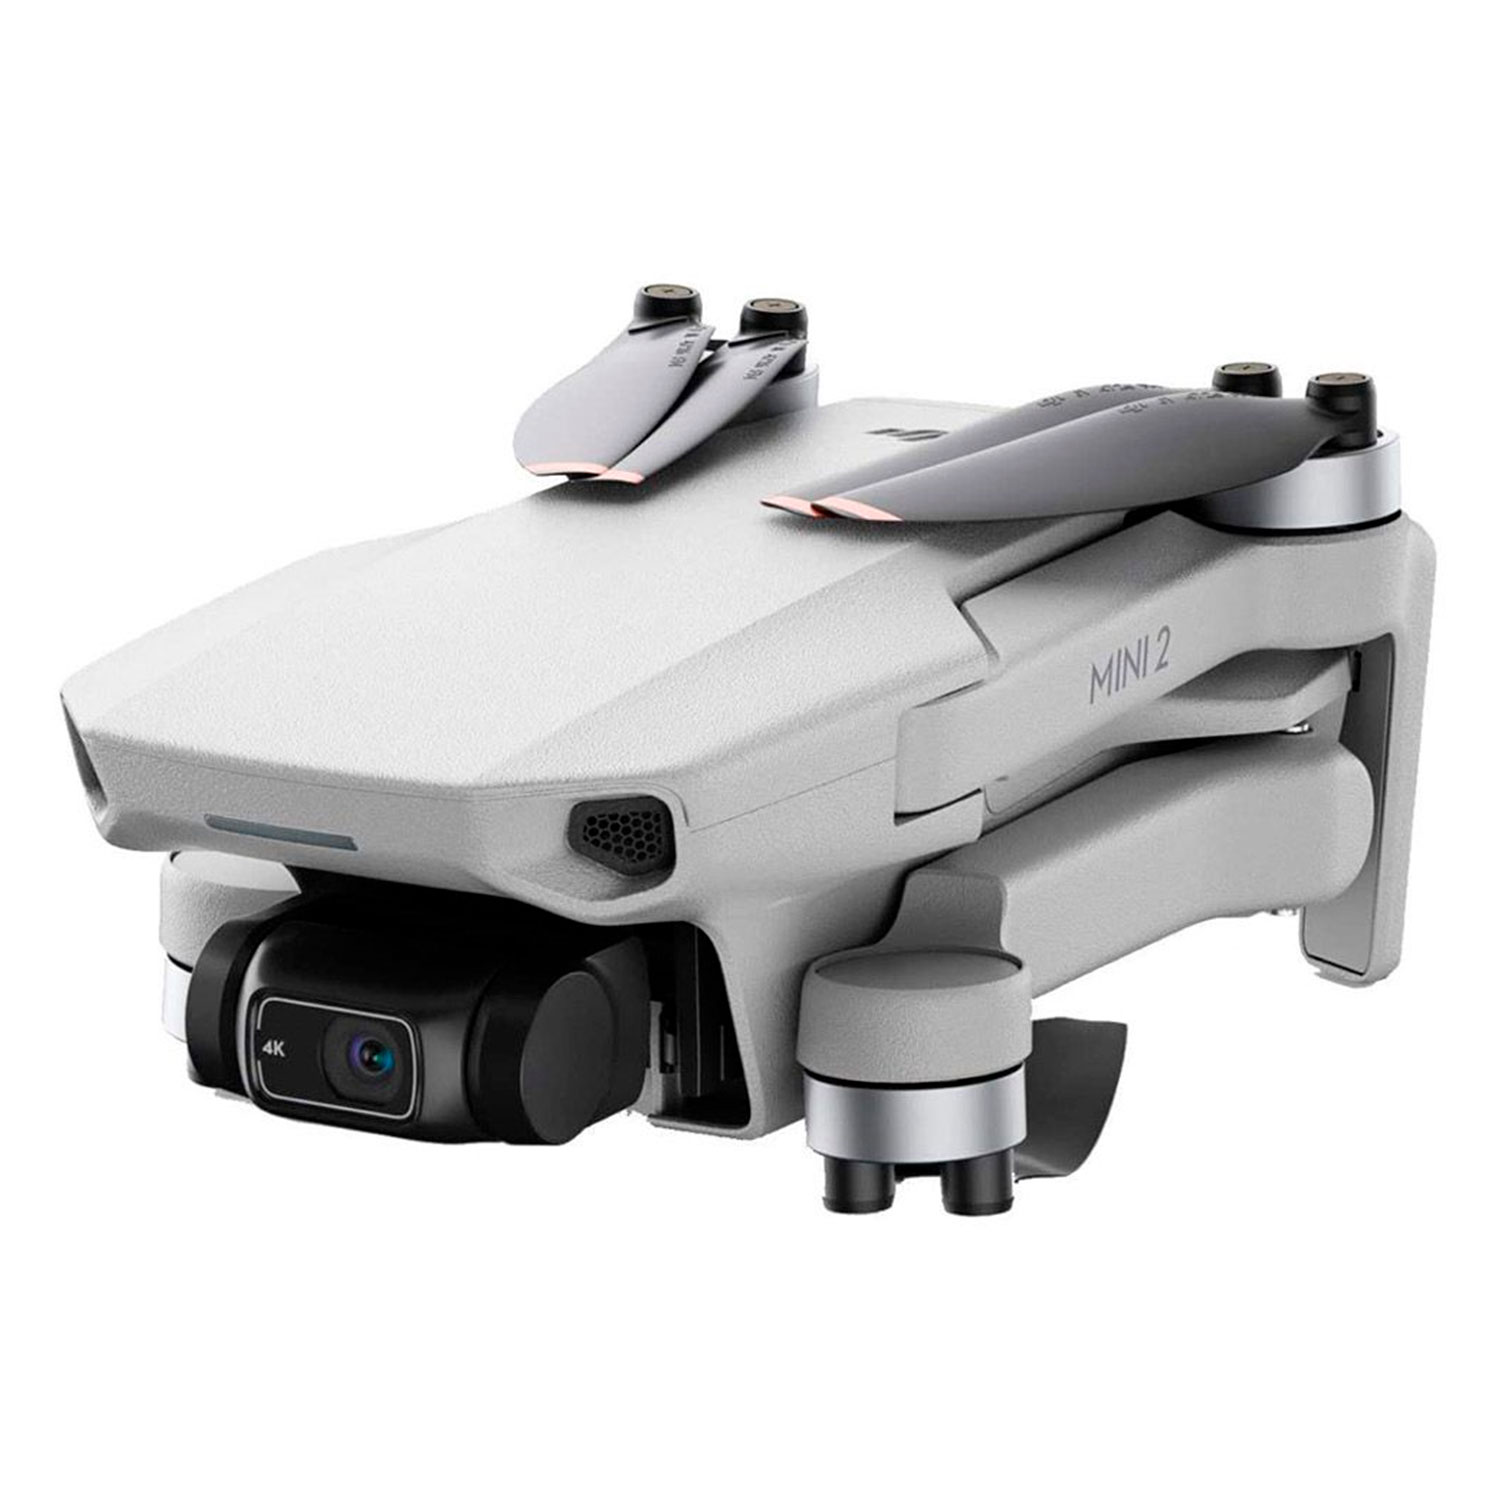 Drone DJI RTF Mavic Mini FLY More Combo - (Refurbished)